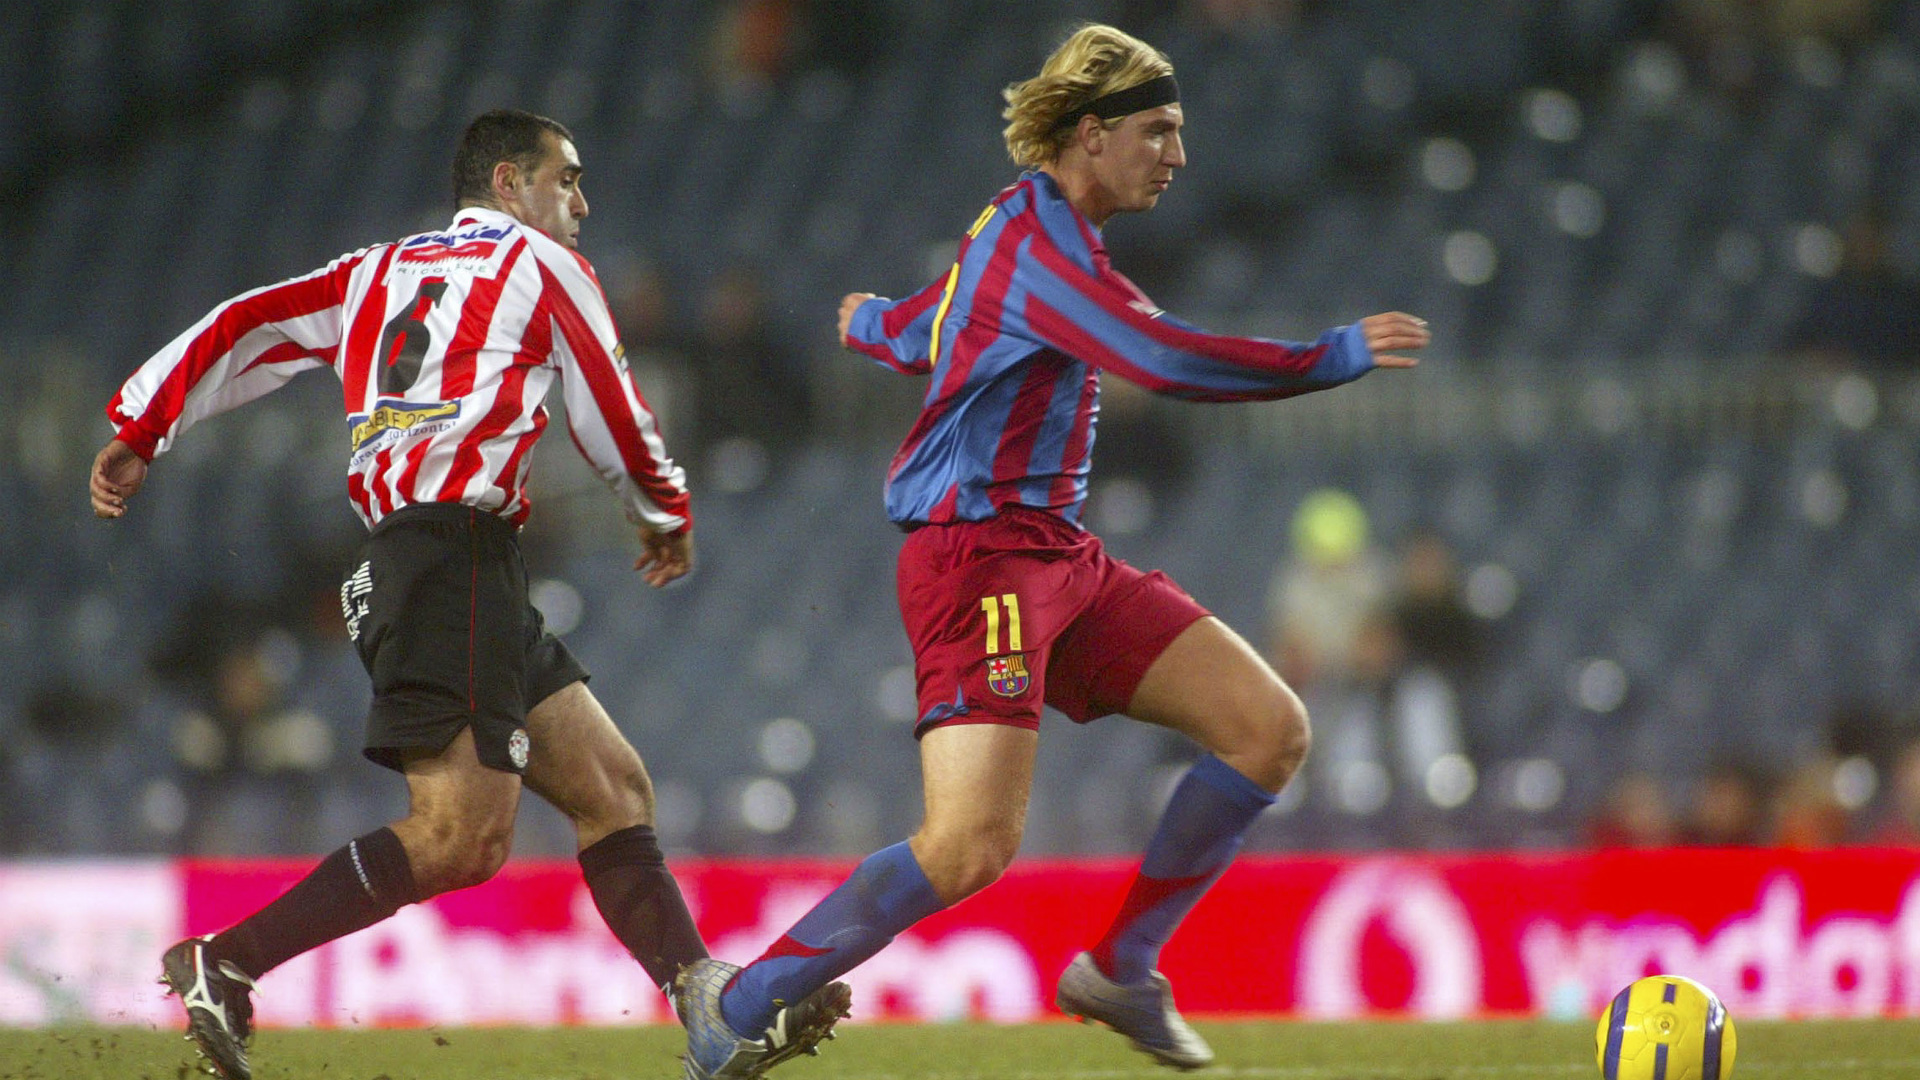 Maxi Lopez ex Barcelona player - Goal.com1920 x 1080